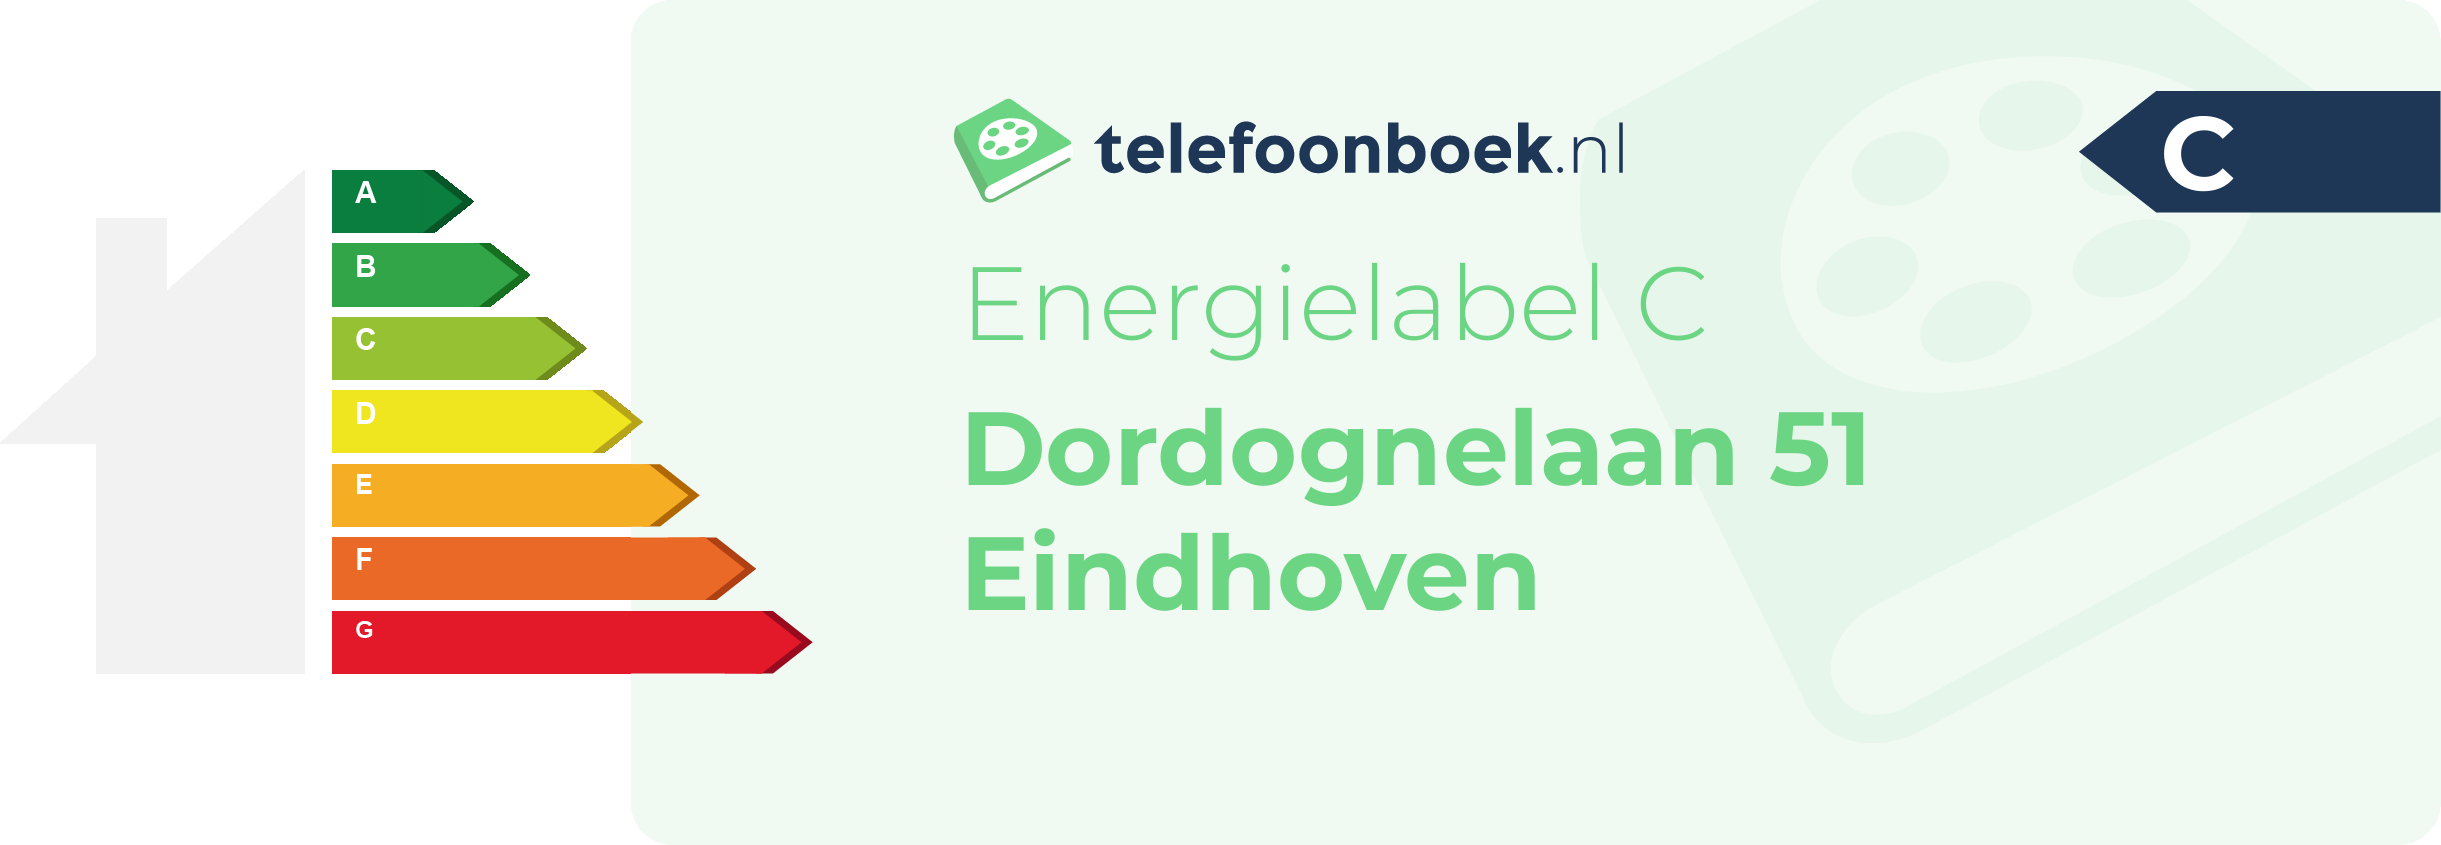 Energielabel Dordognelaan 51 Eindhoven